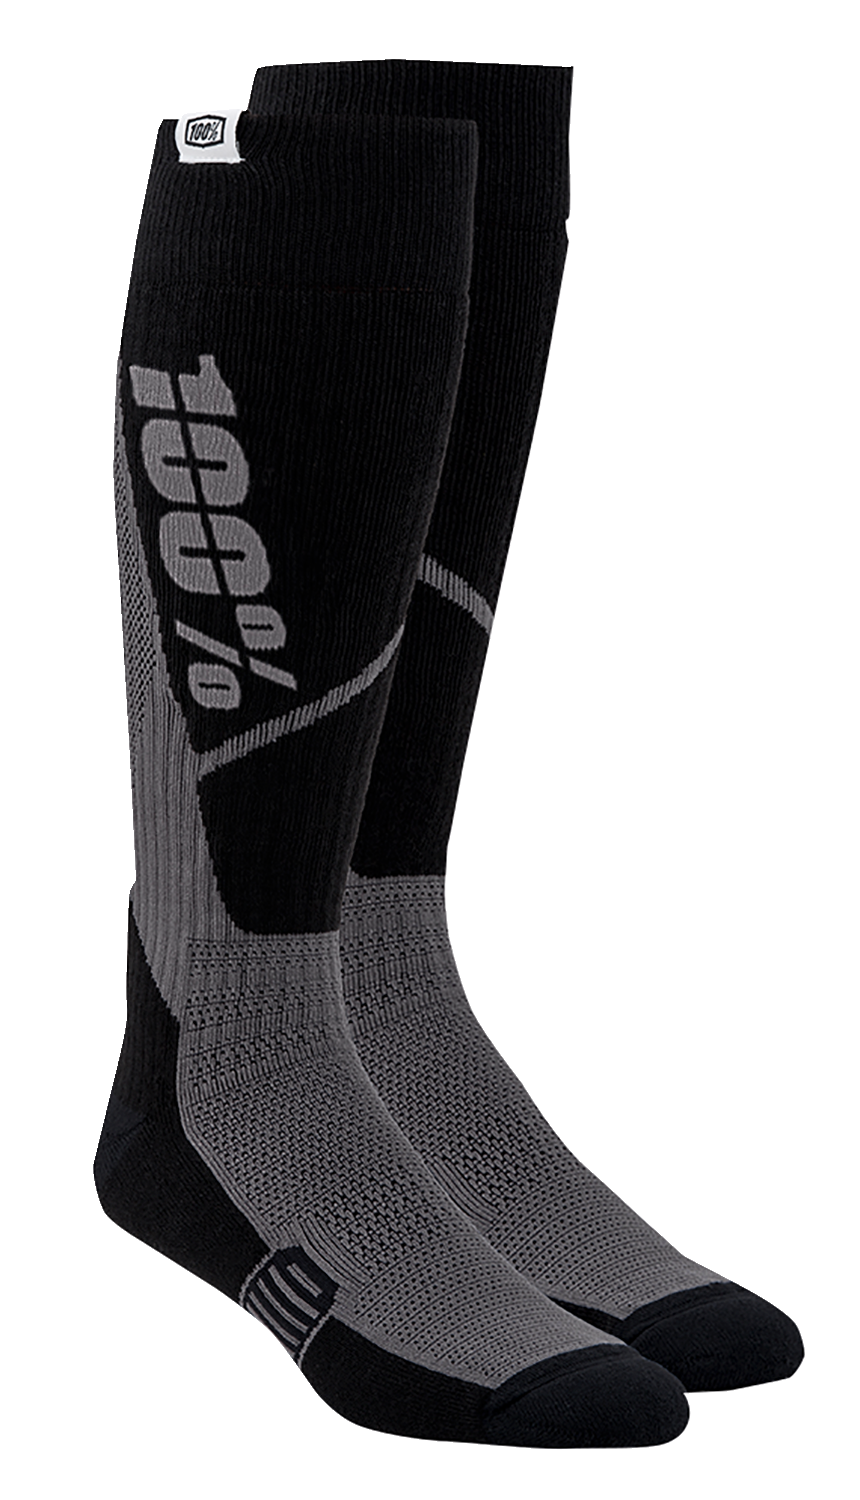 100% Torque Comfort Moto Socks - Black - Large/XL 20053-00002